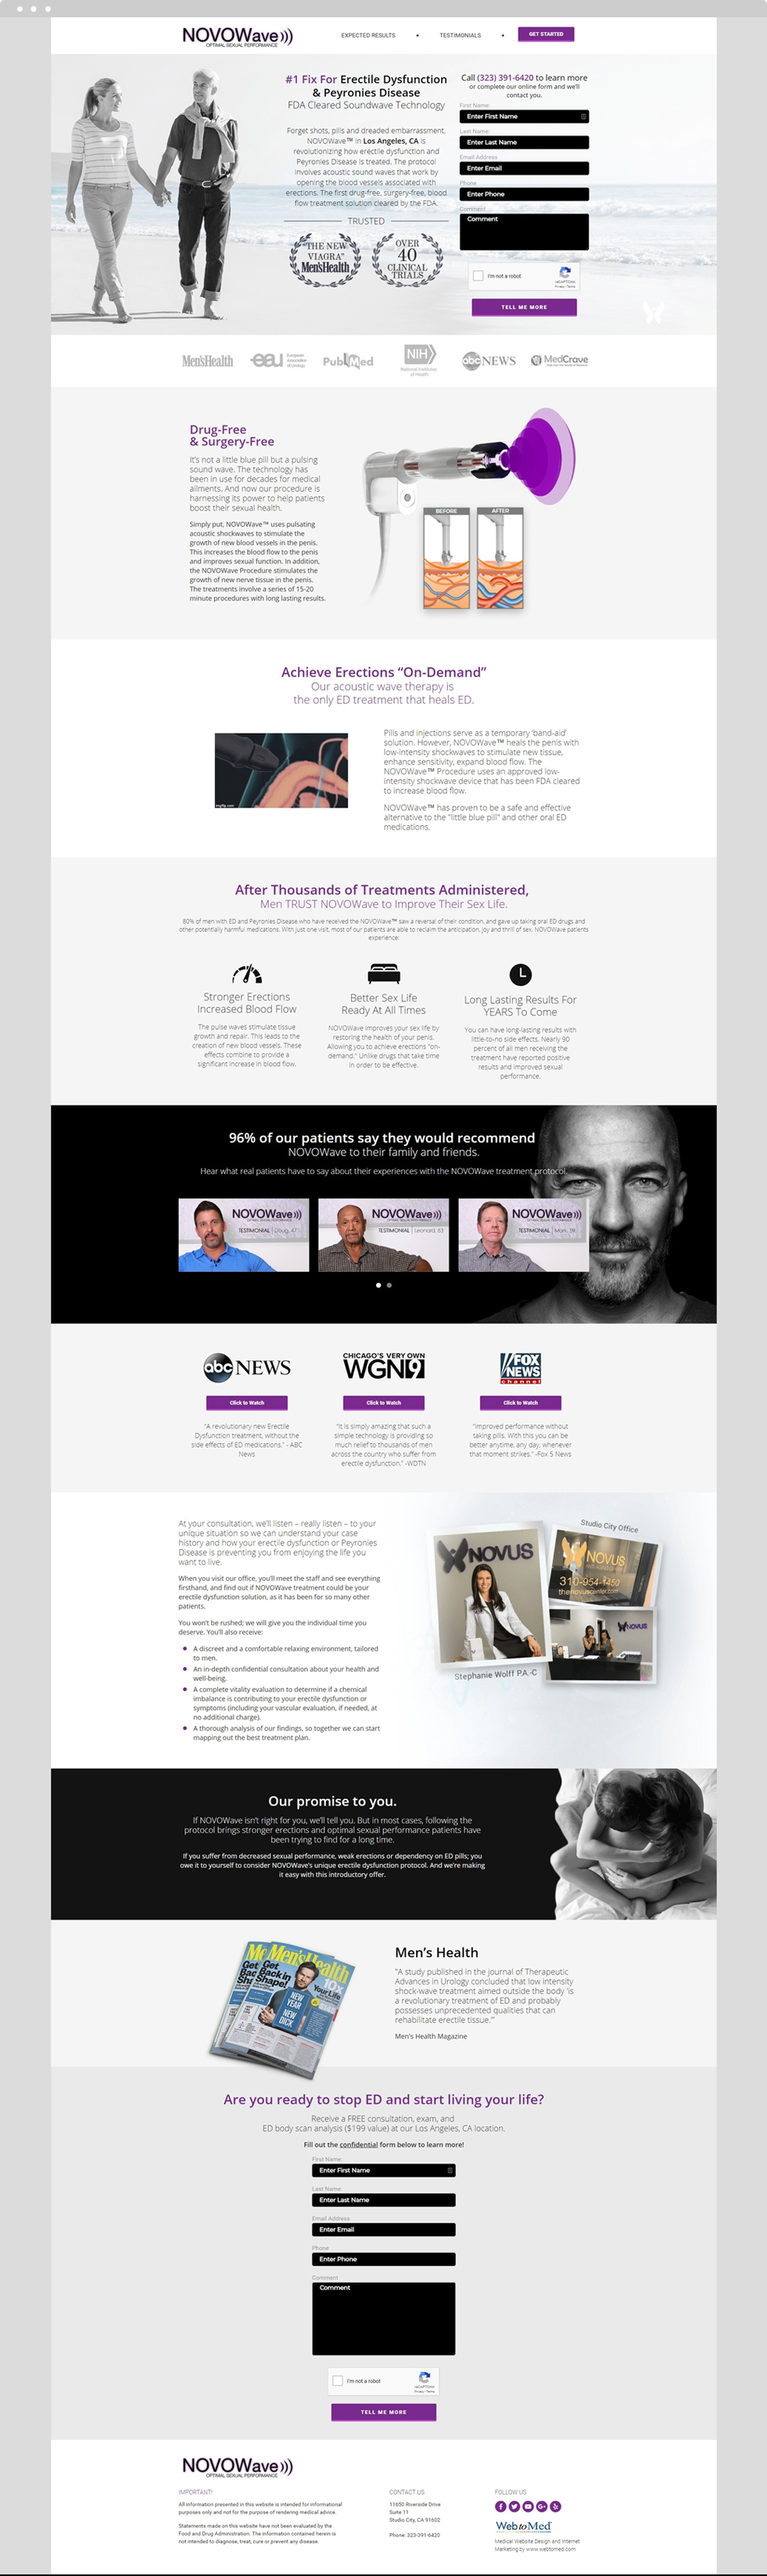 Sexual Health Website Design - NOVOWave - Homepage